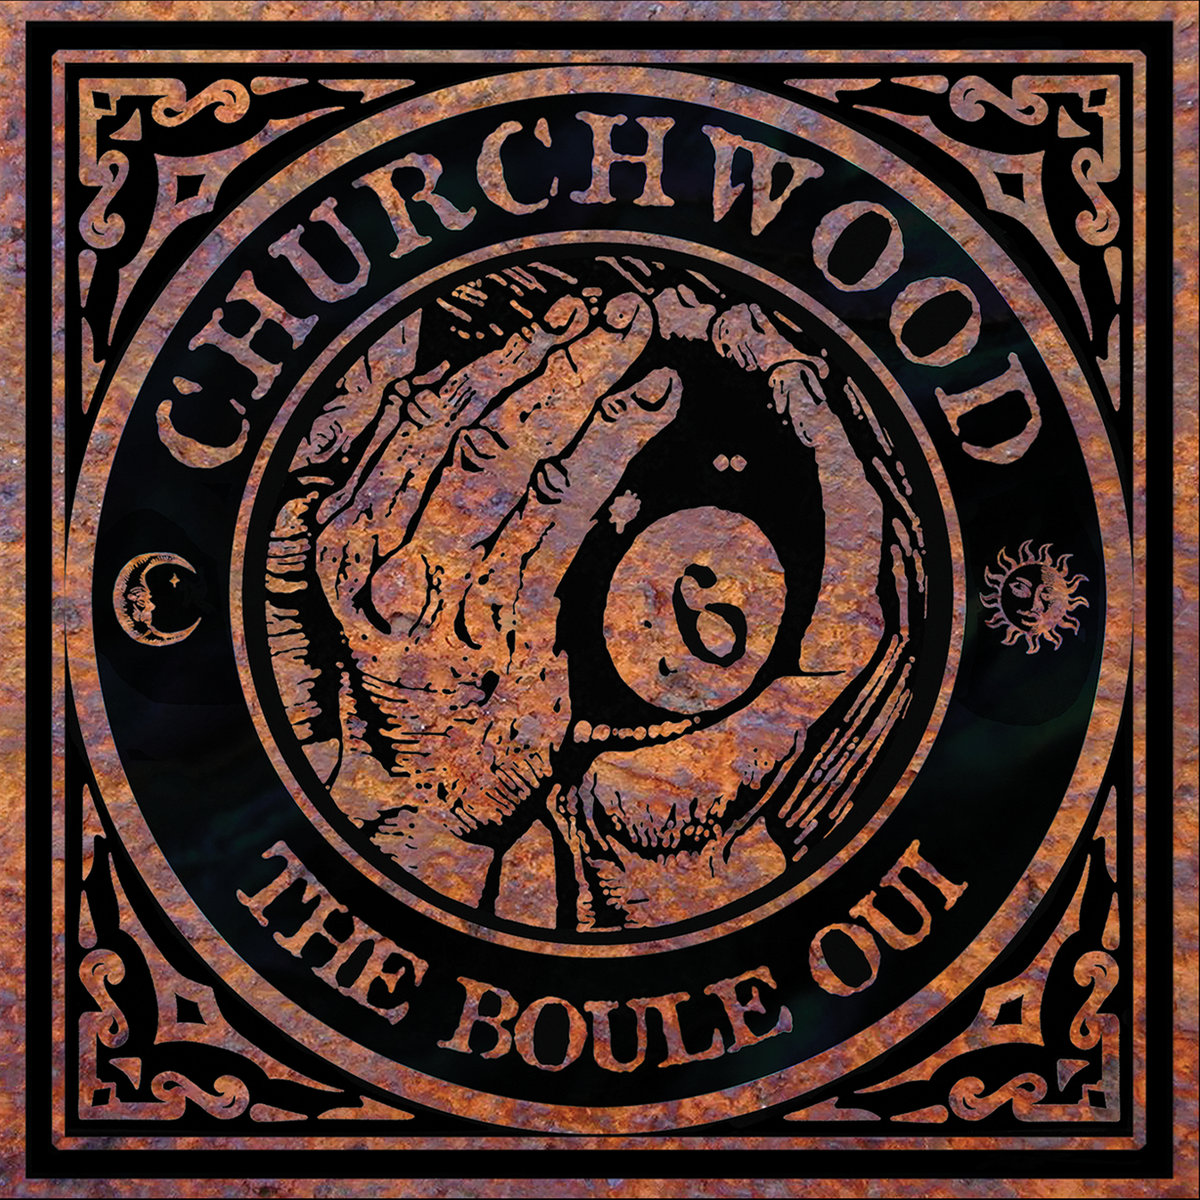 Churchwood